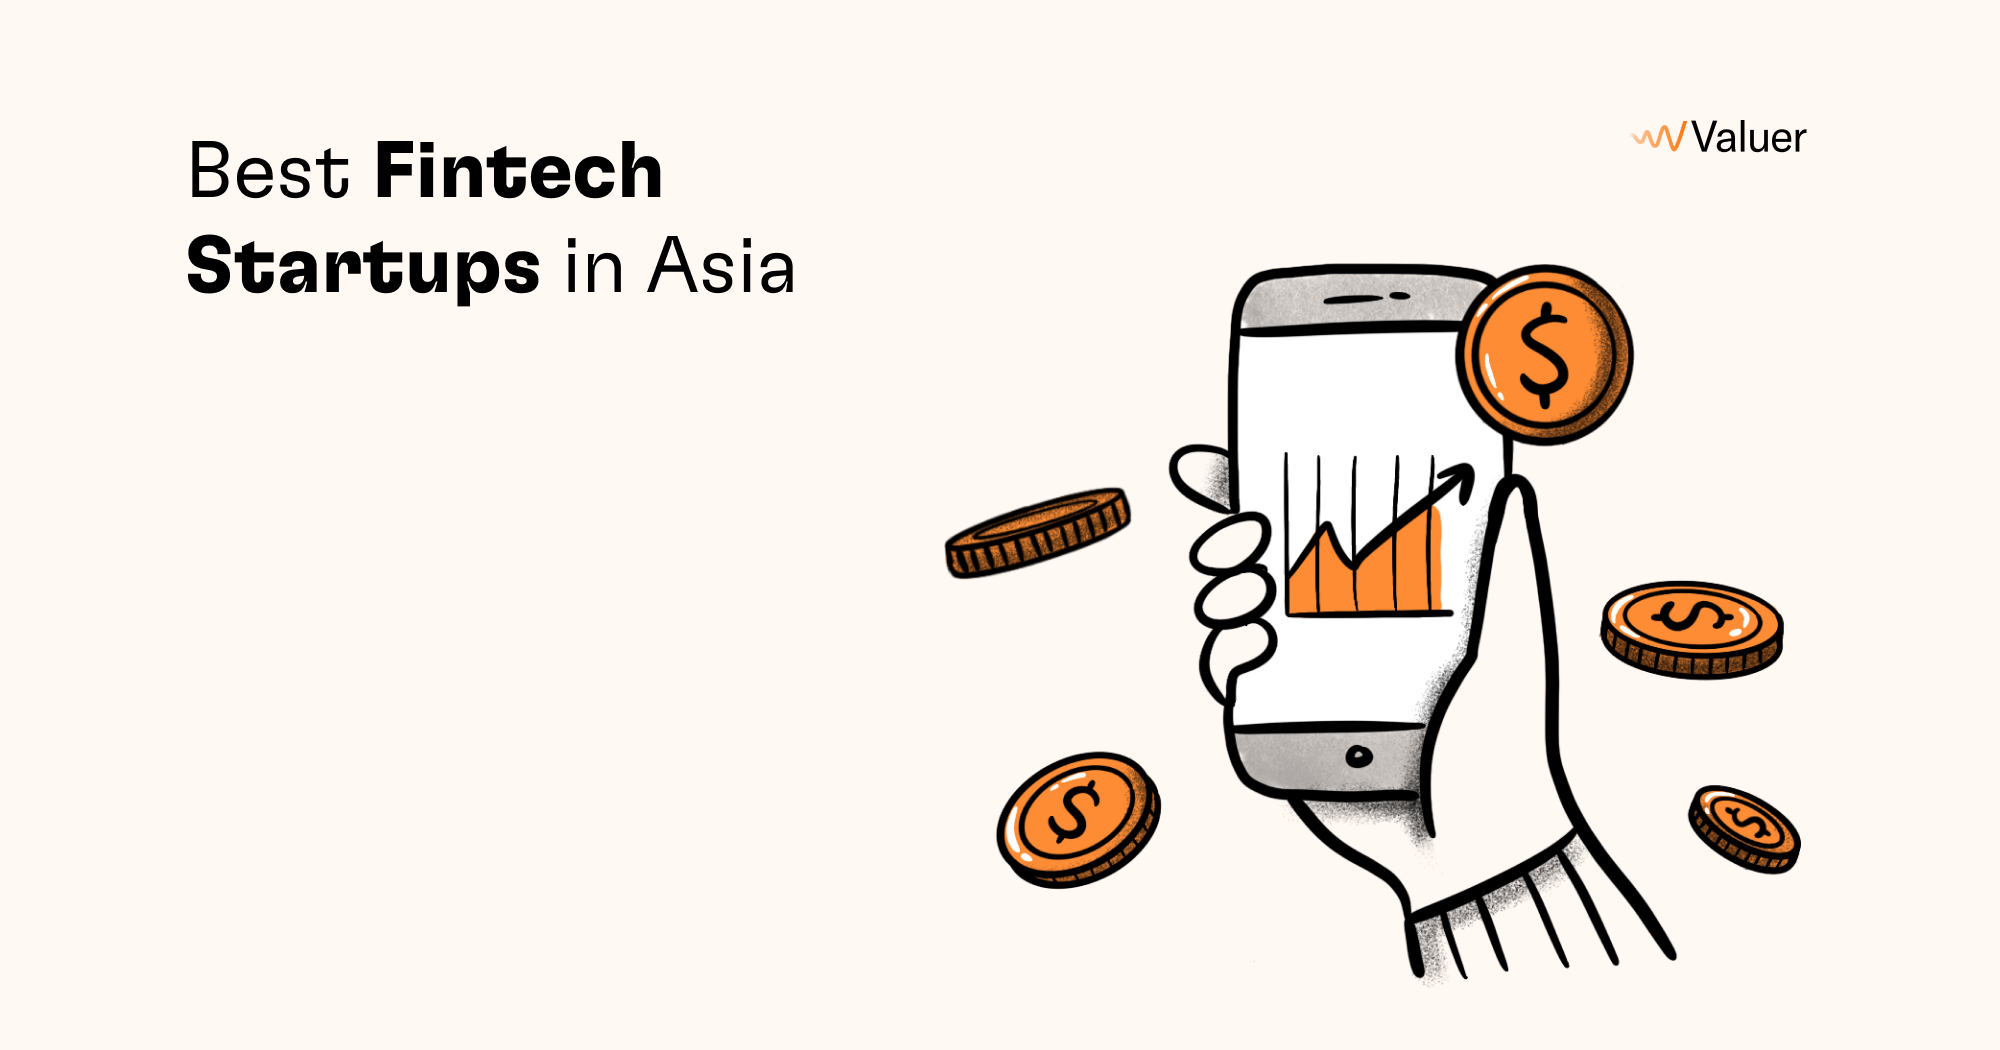 Best Fintech Startups in Asia